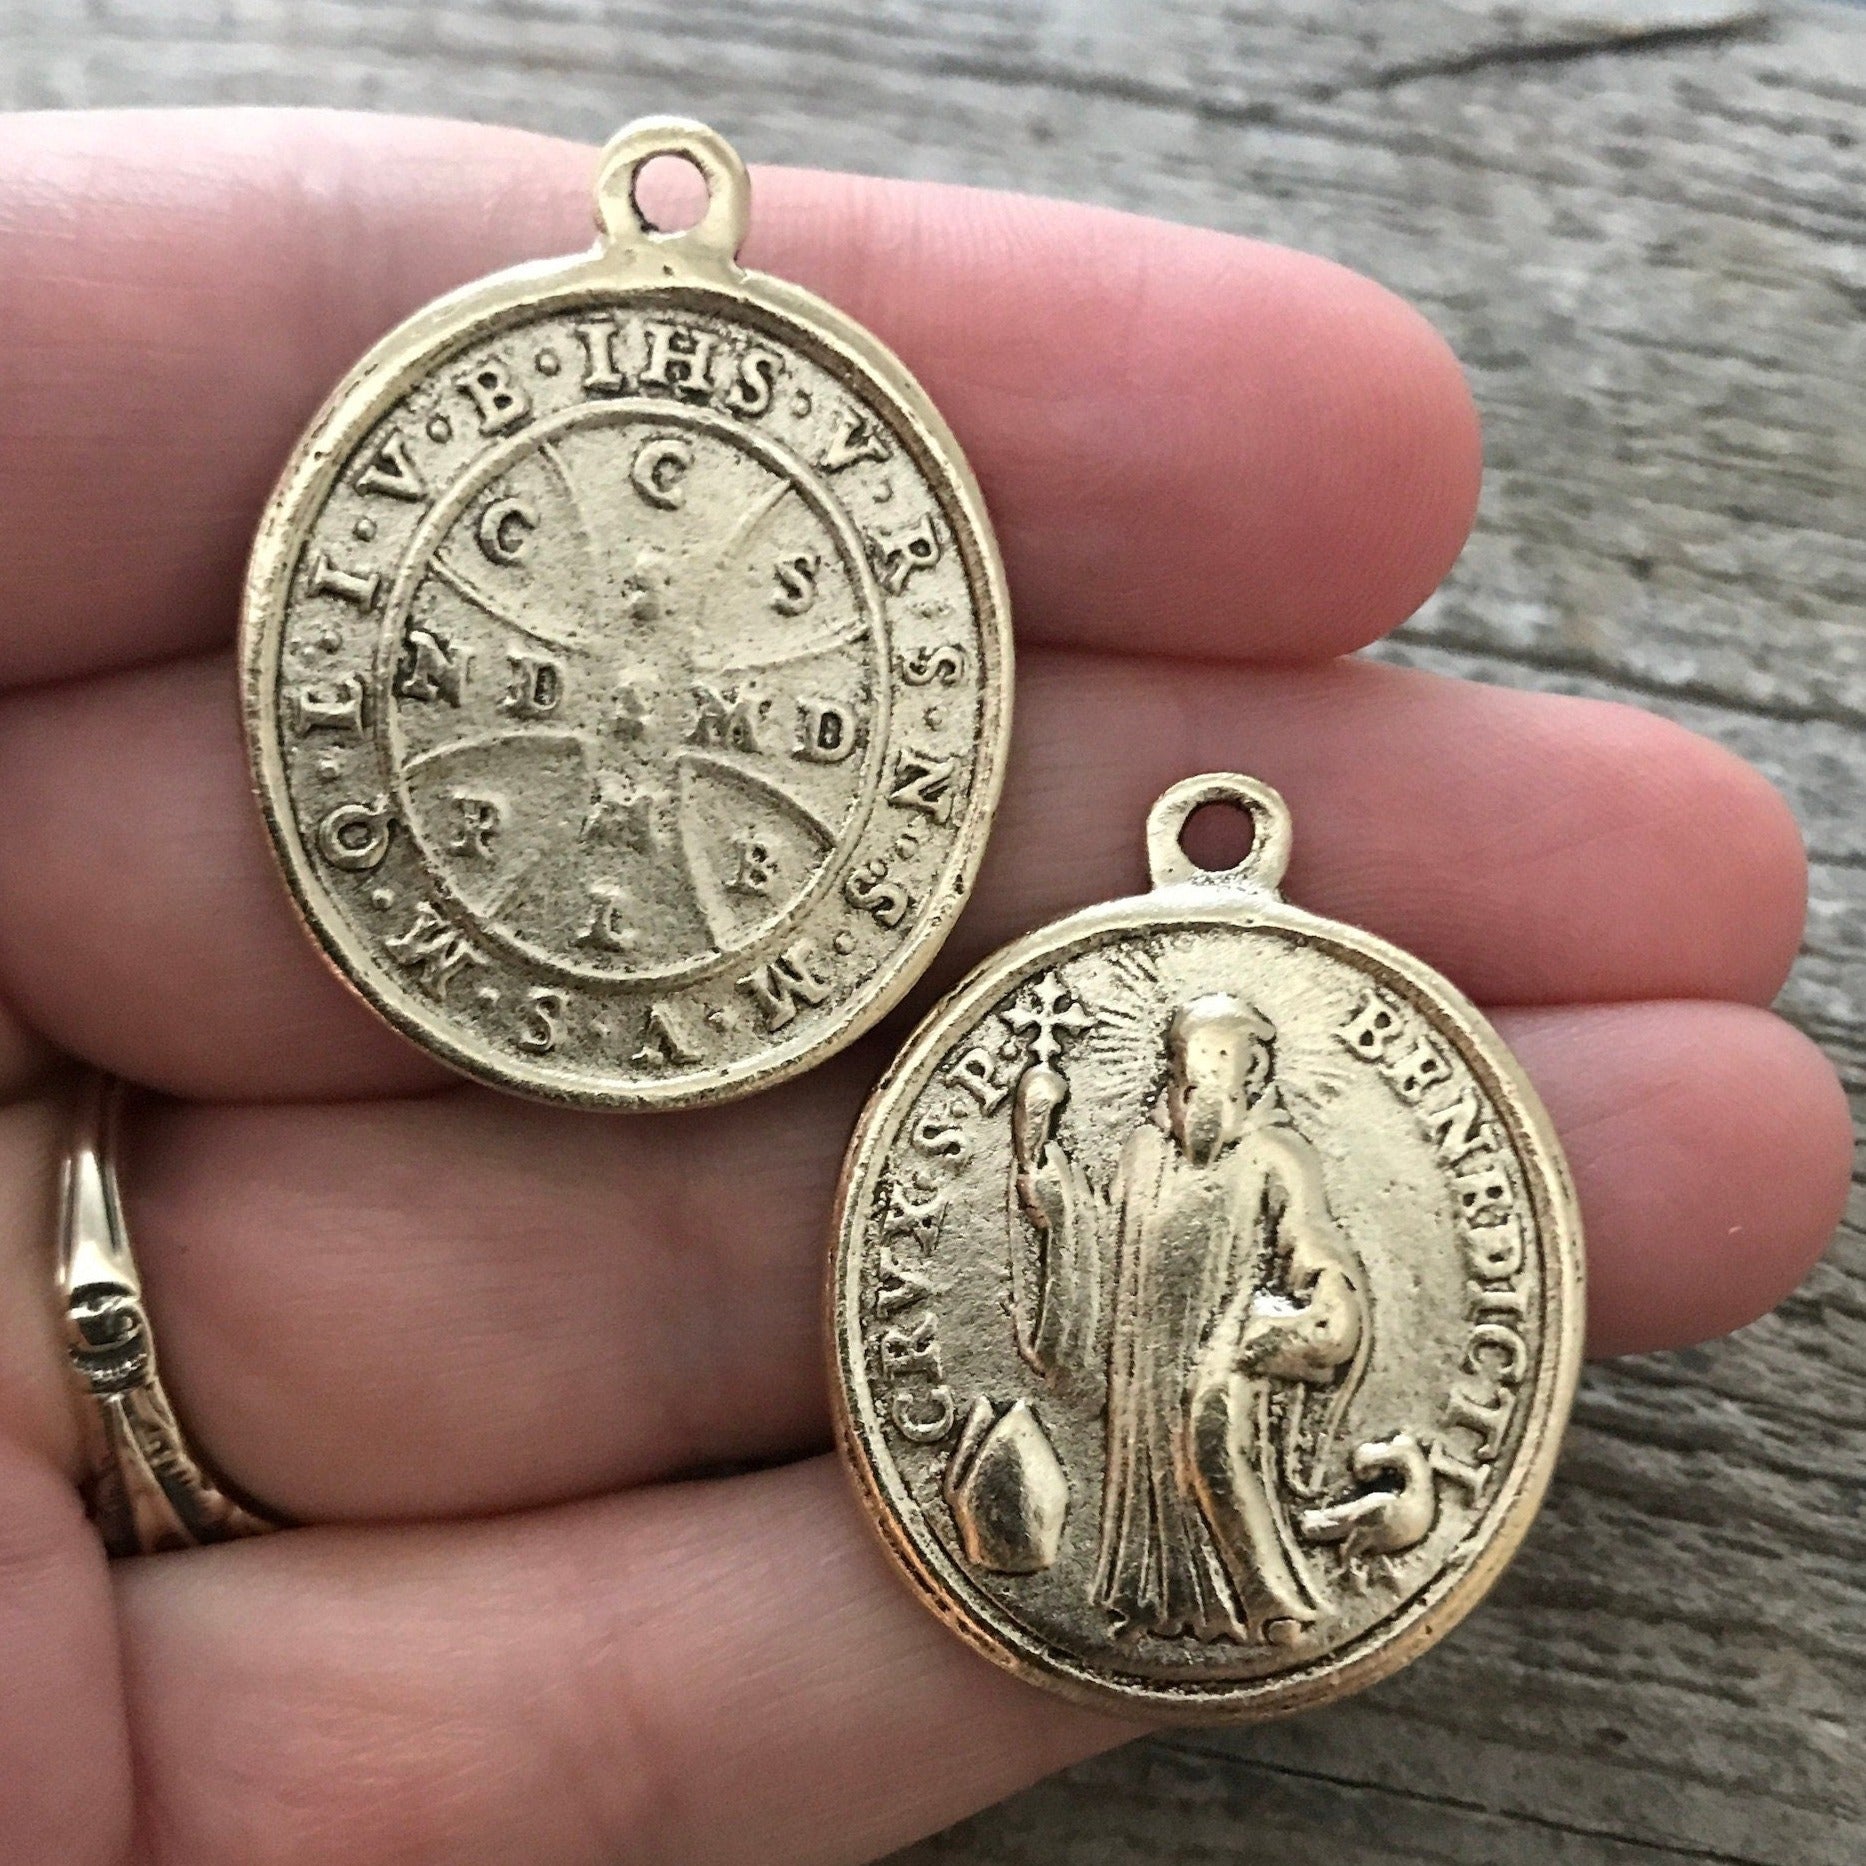 Saint St. Benedict Medal, Benedictan Cross, Antiqued Silver Catholic Medal,  Religious Pendant Charm Jewelry Supplies, PW-6078 